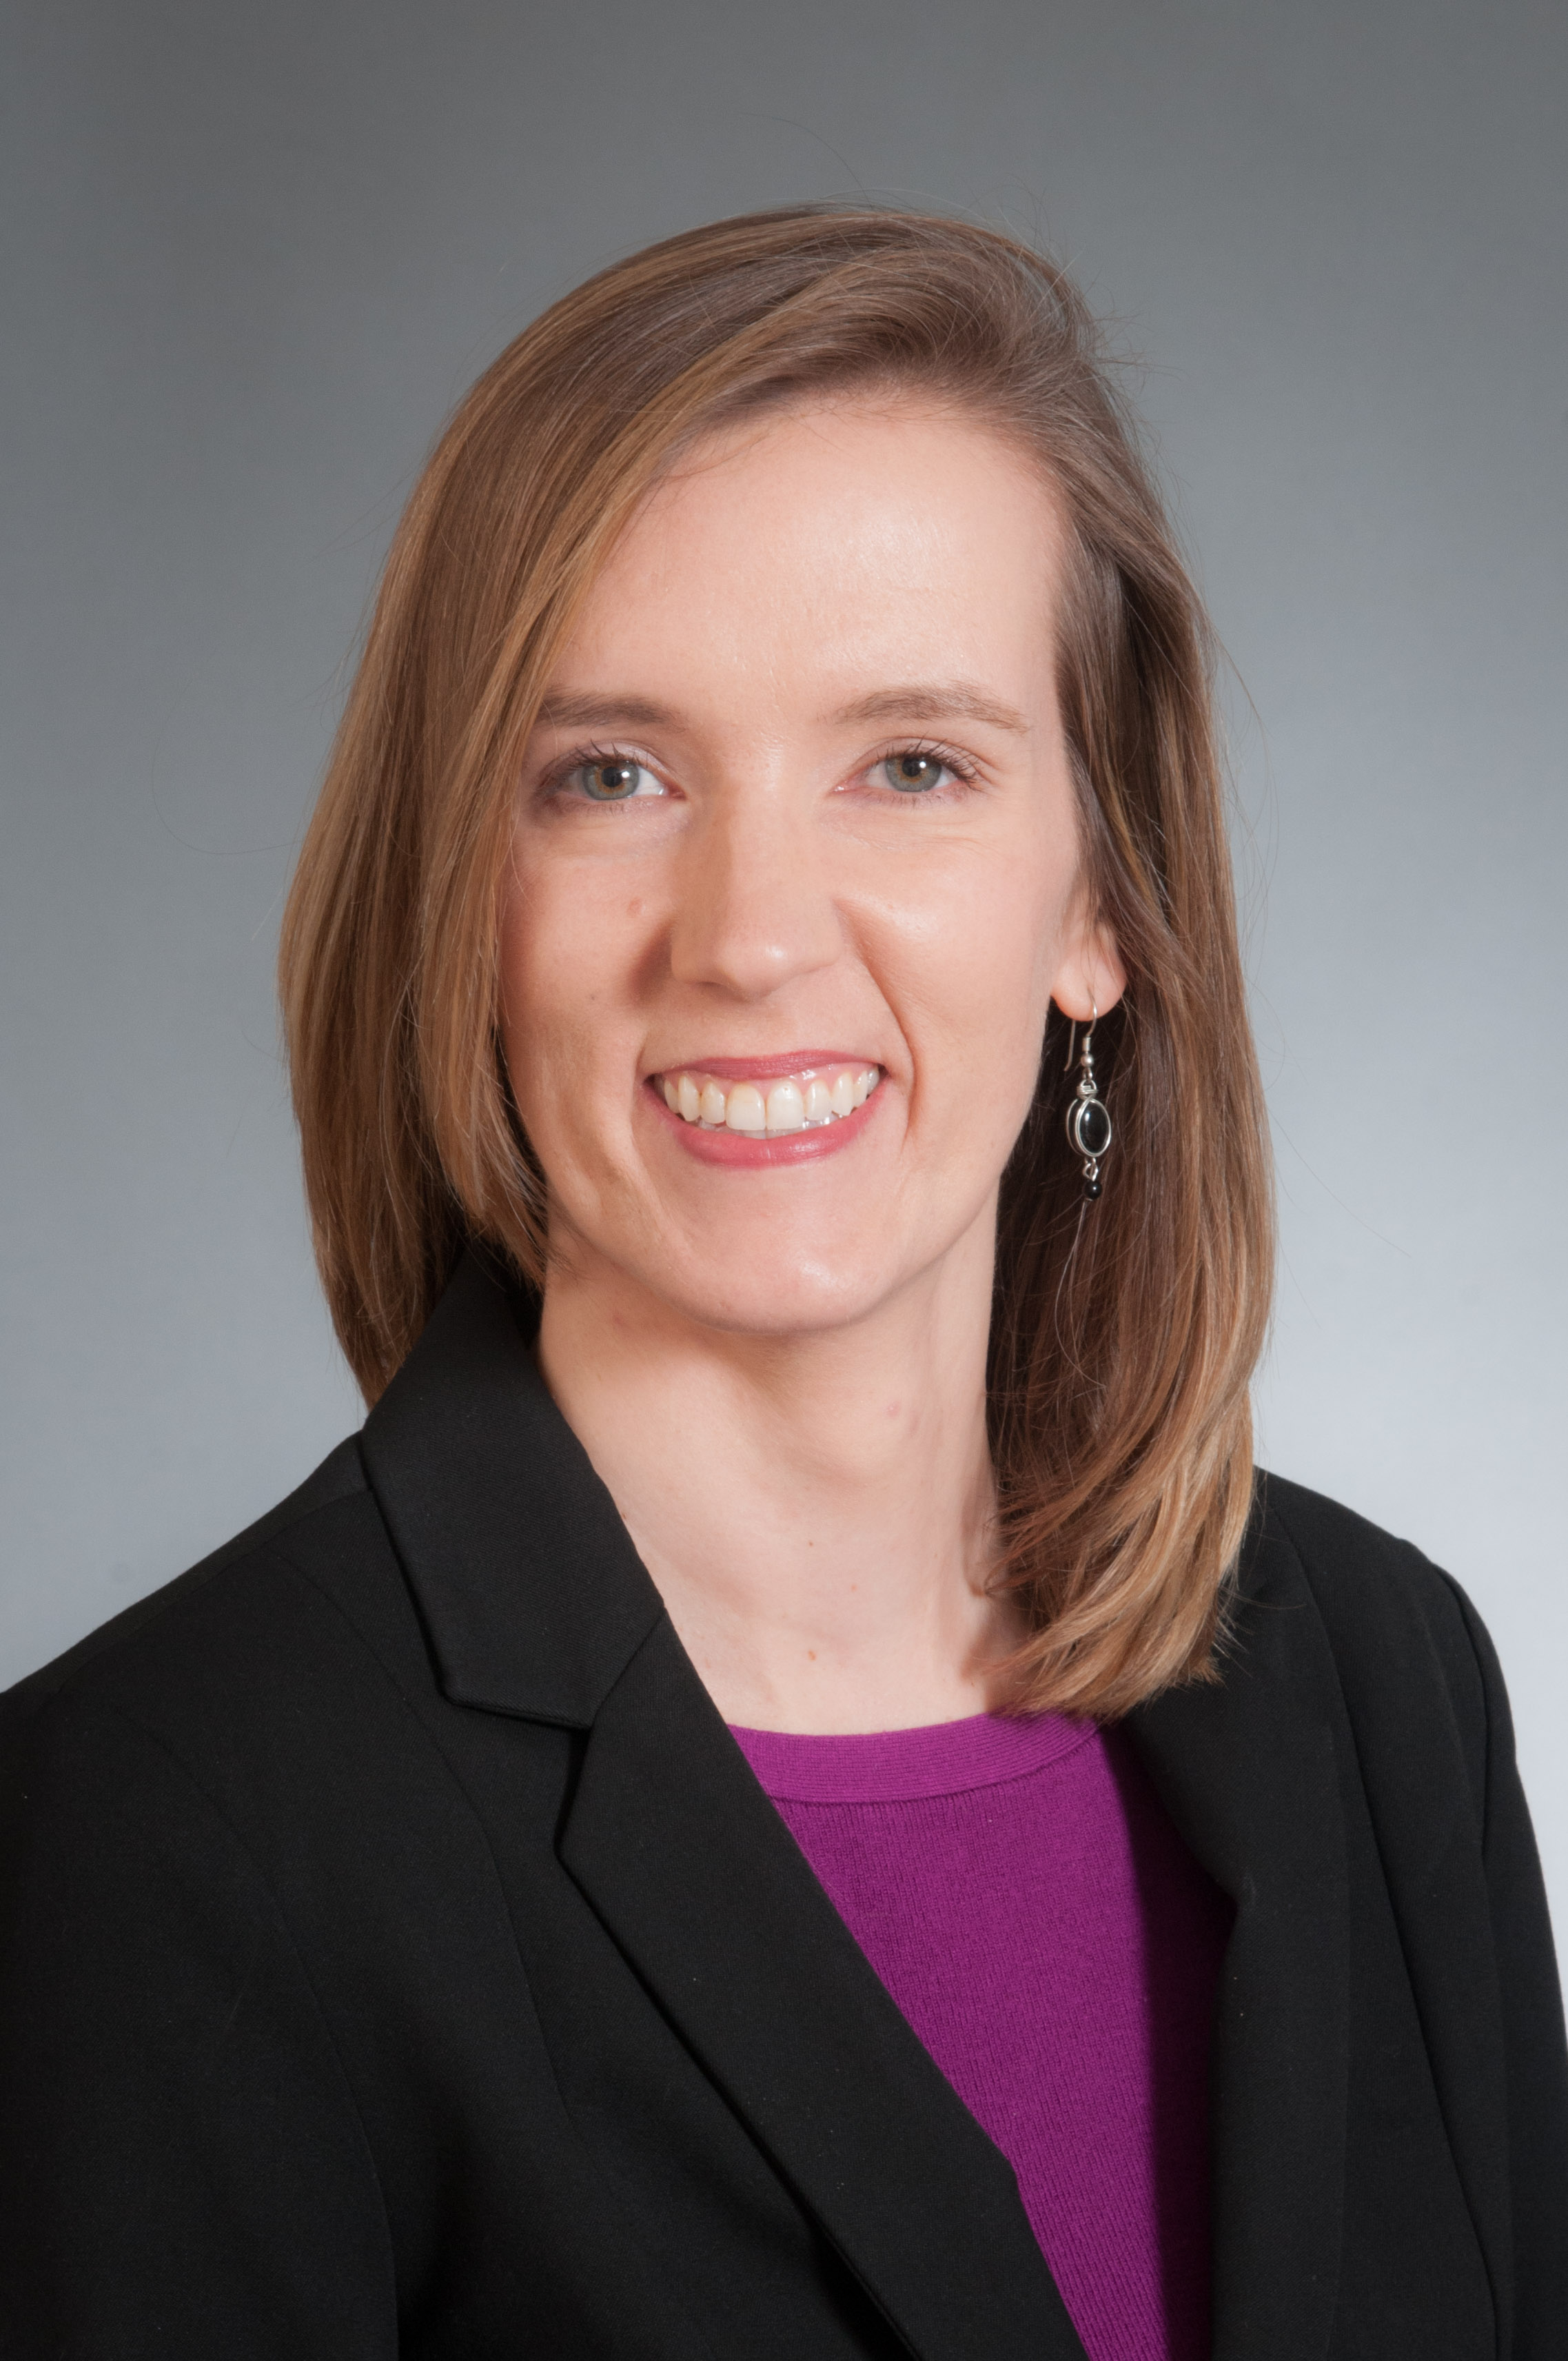 Danielle Kuhn, Wellbeing Program Manager